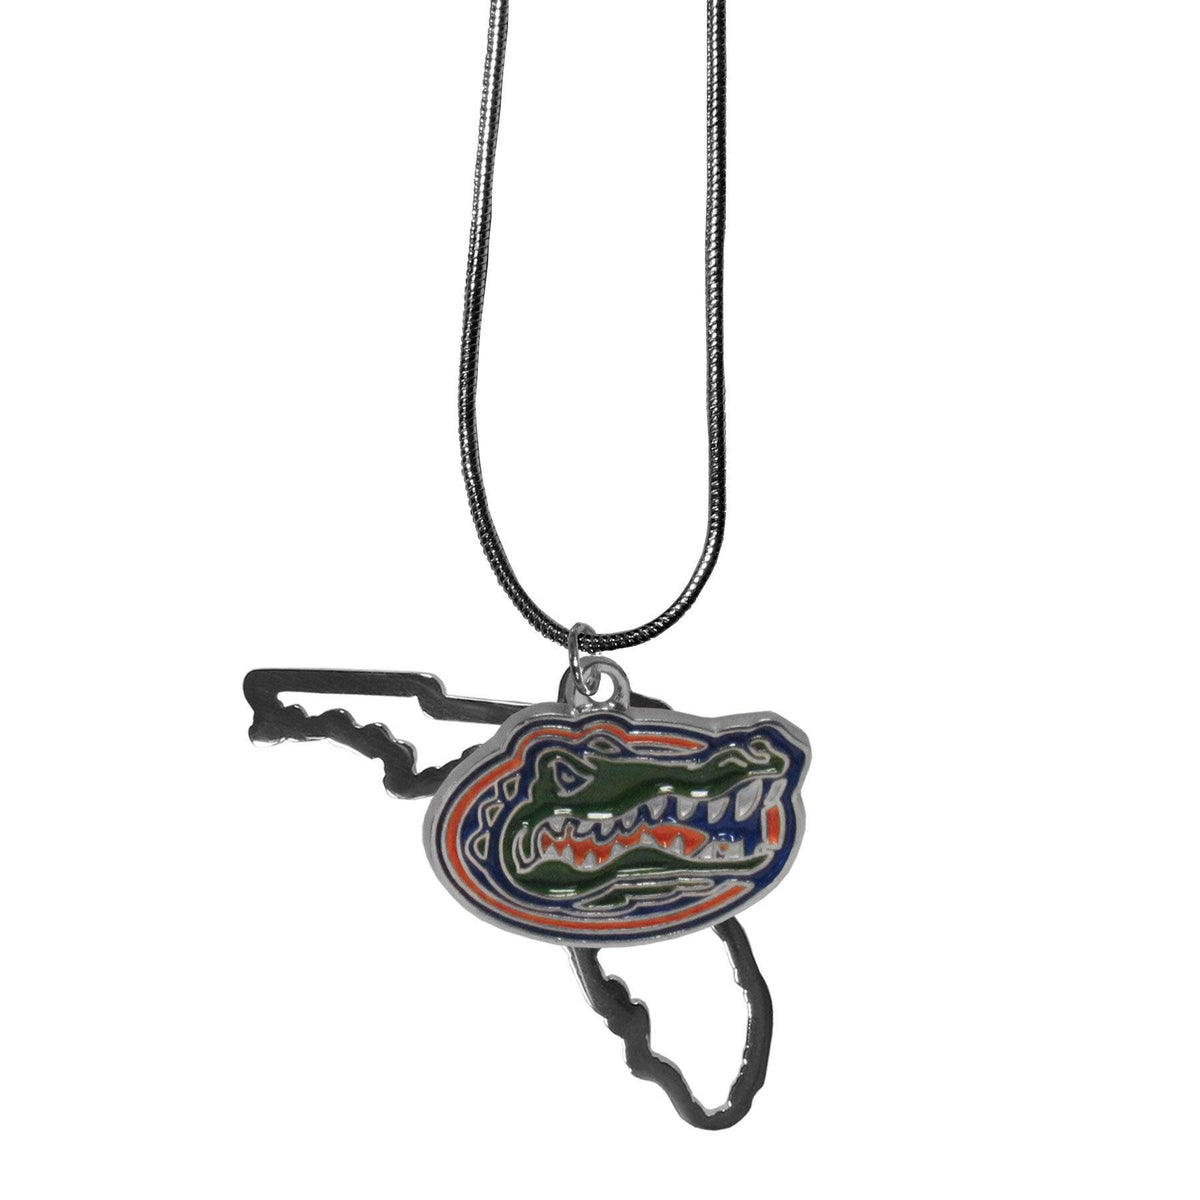 Florida Gators State Charm Necklace - Flyclothing LLC